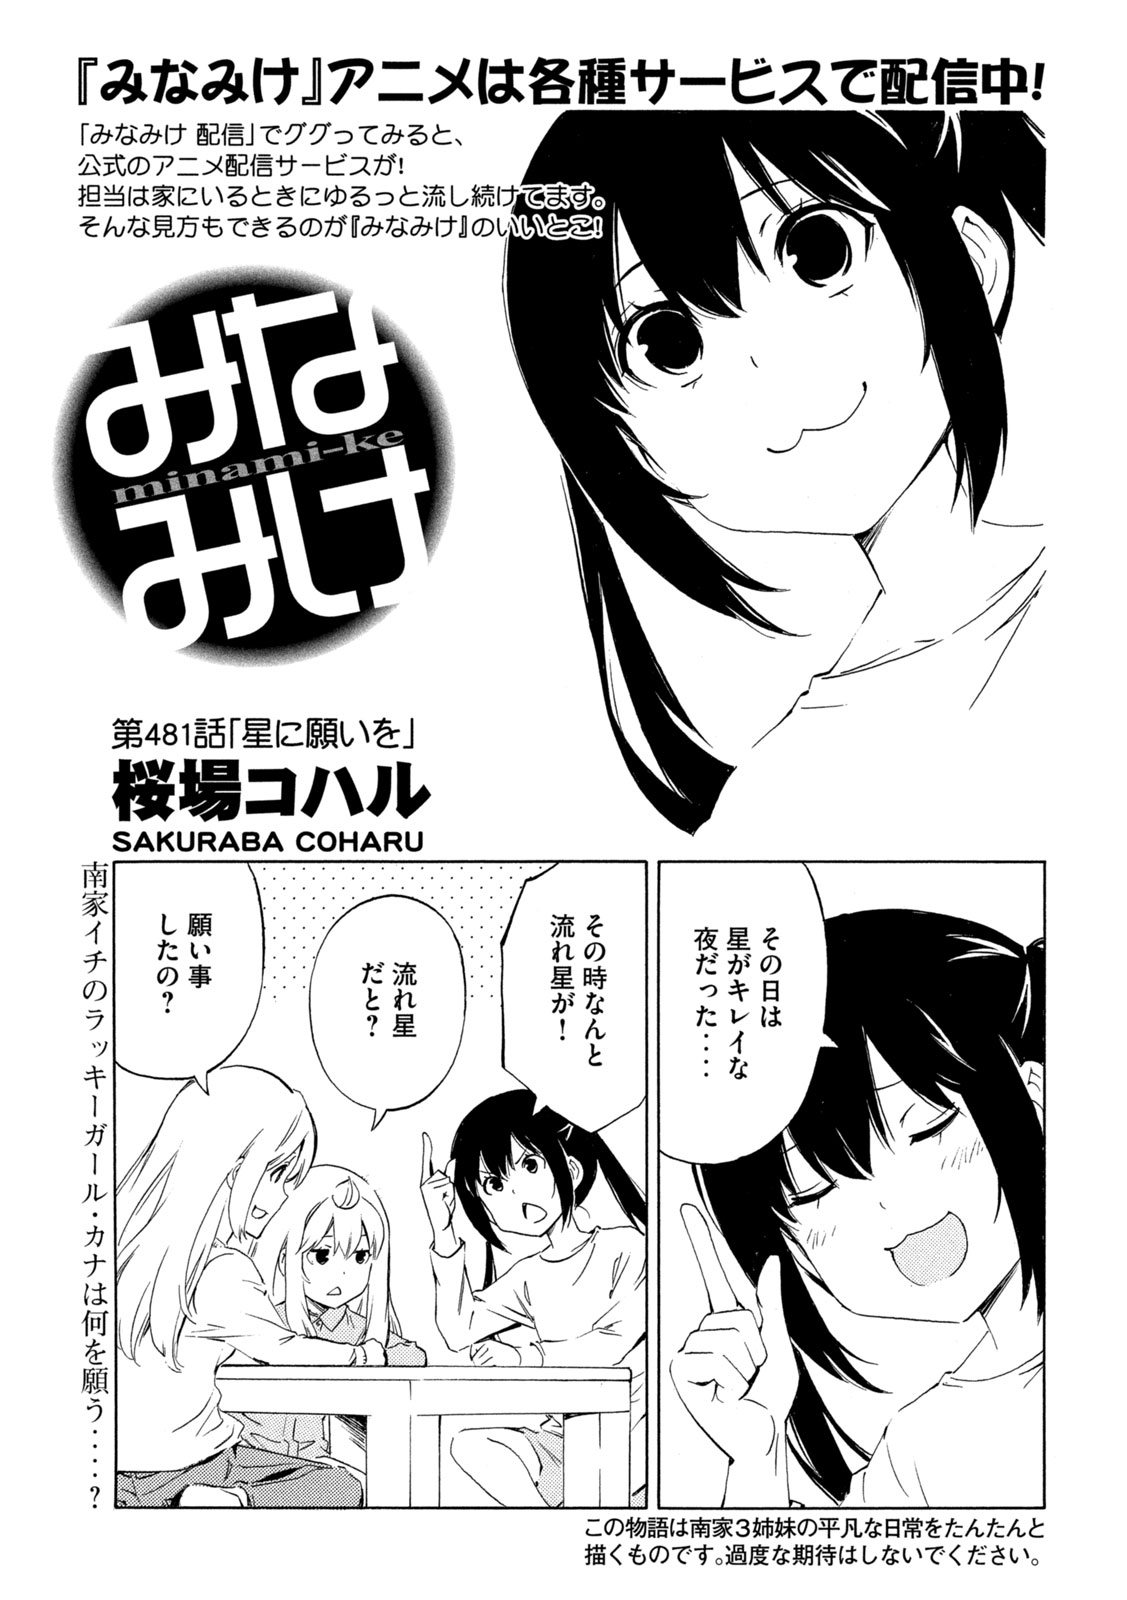 Minami-ke - Chapter 481 - Page 1